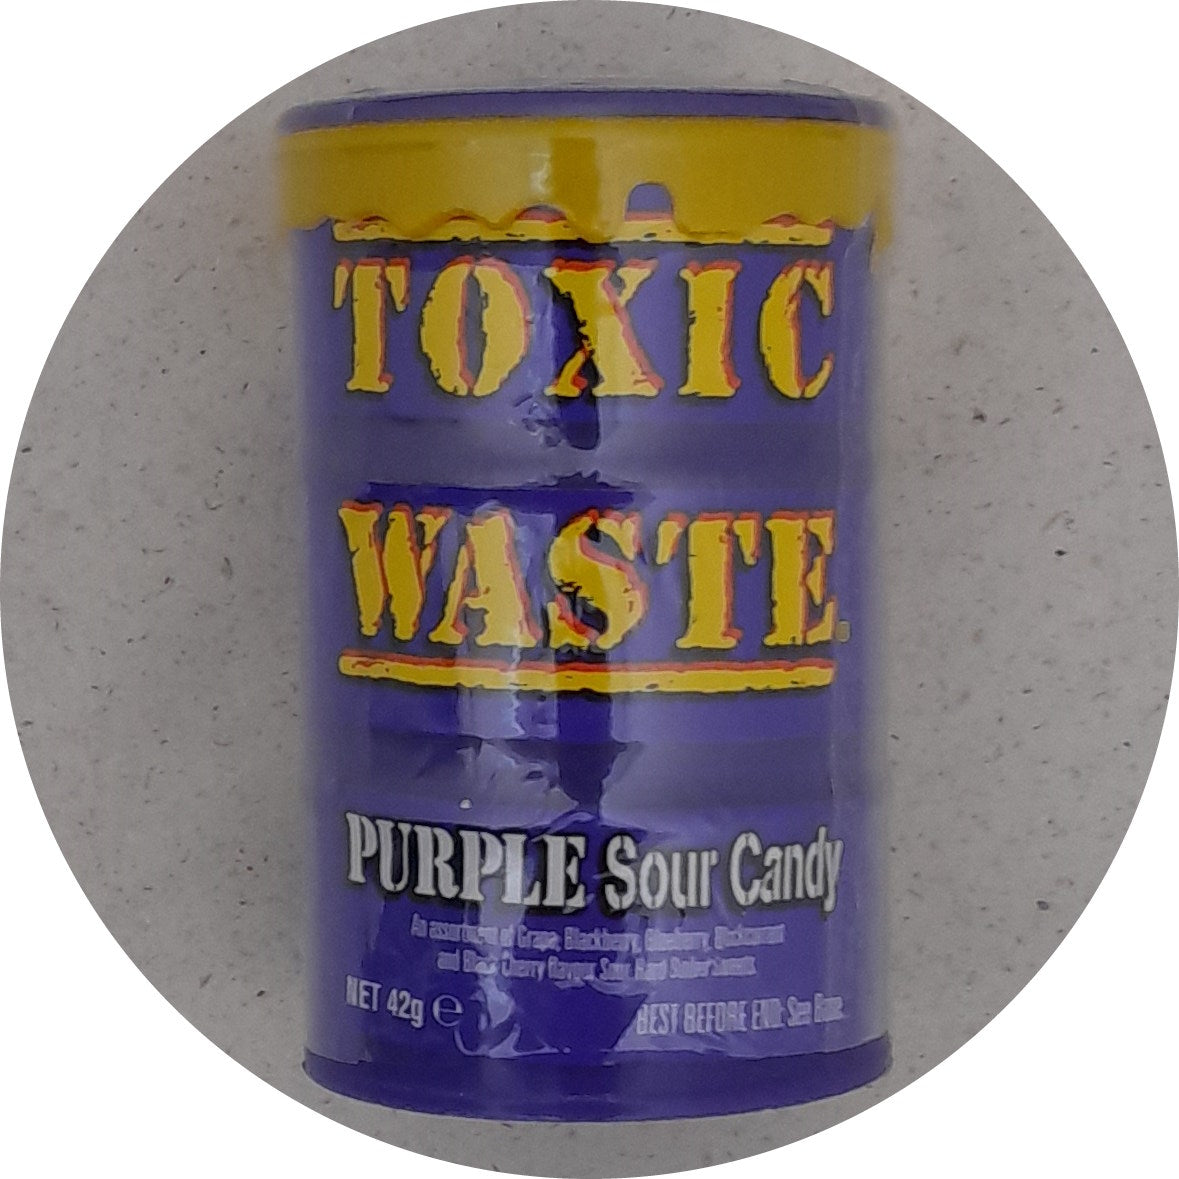 Toxic Waste Purple Sour Candy 42g - Worldster Markt e.K.